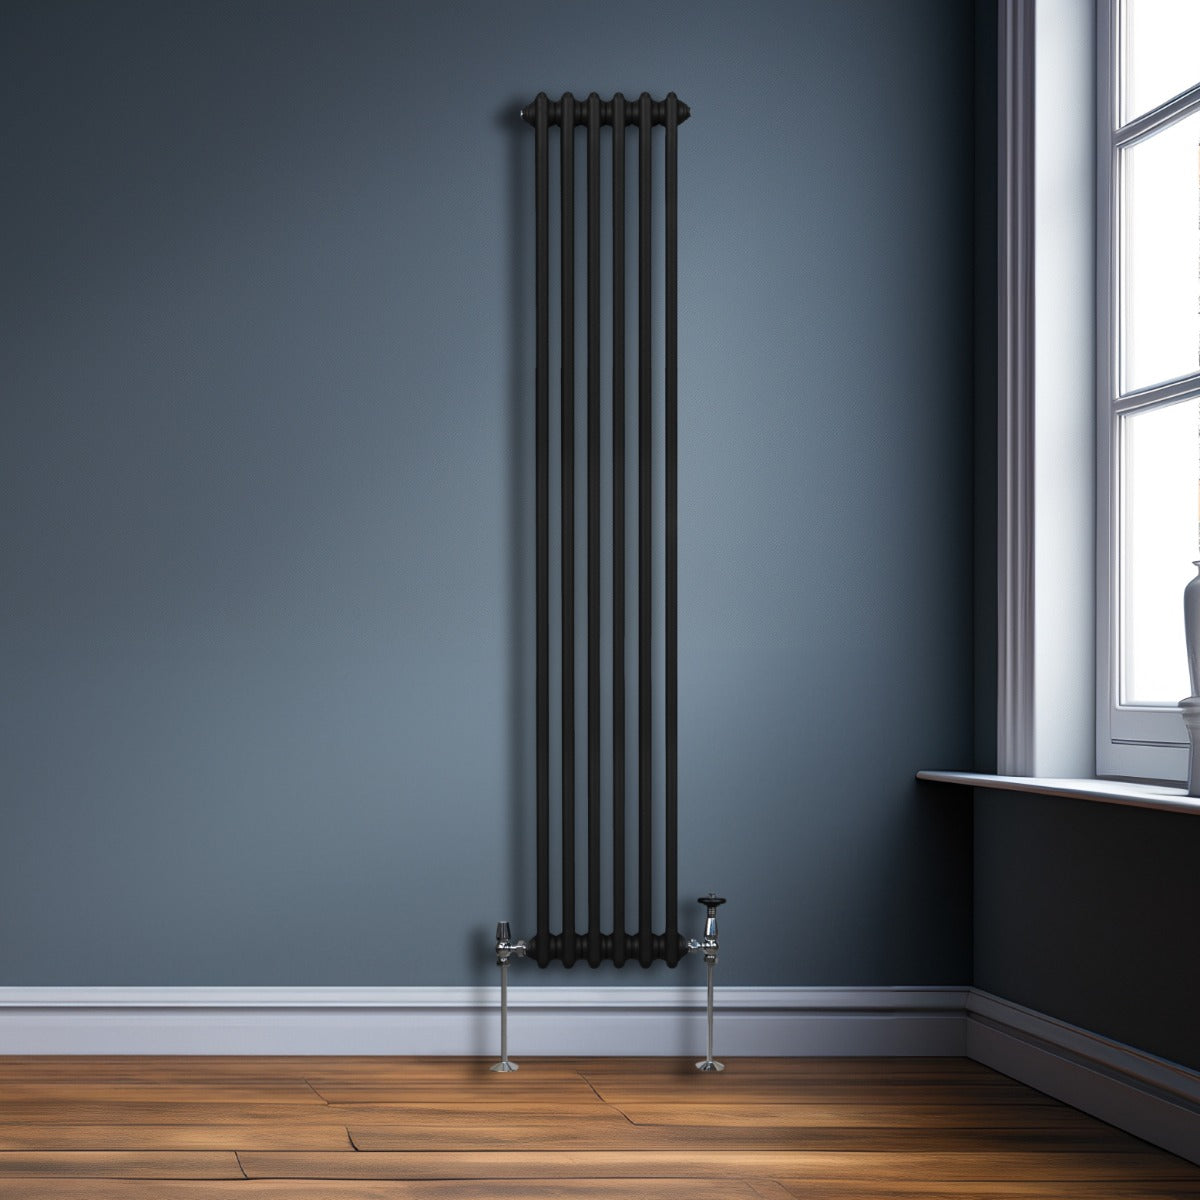 Radiador Tradicional Vertical de 3 columnas – 1800 x 292mm - Negro